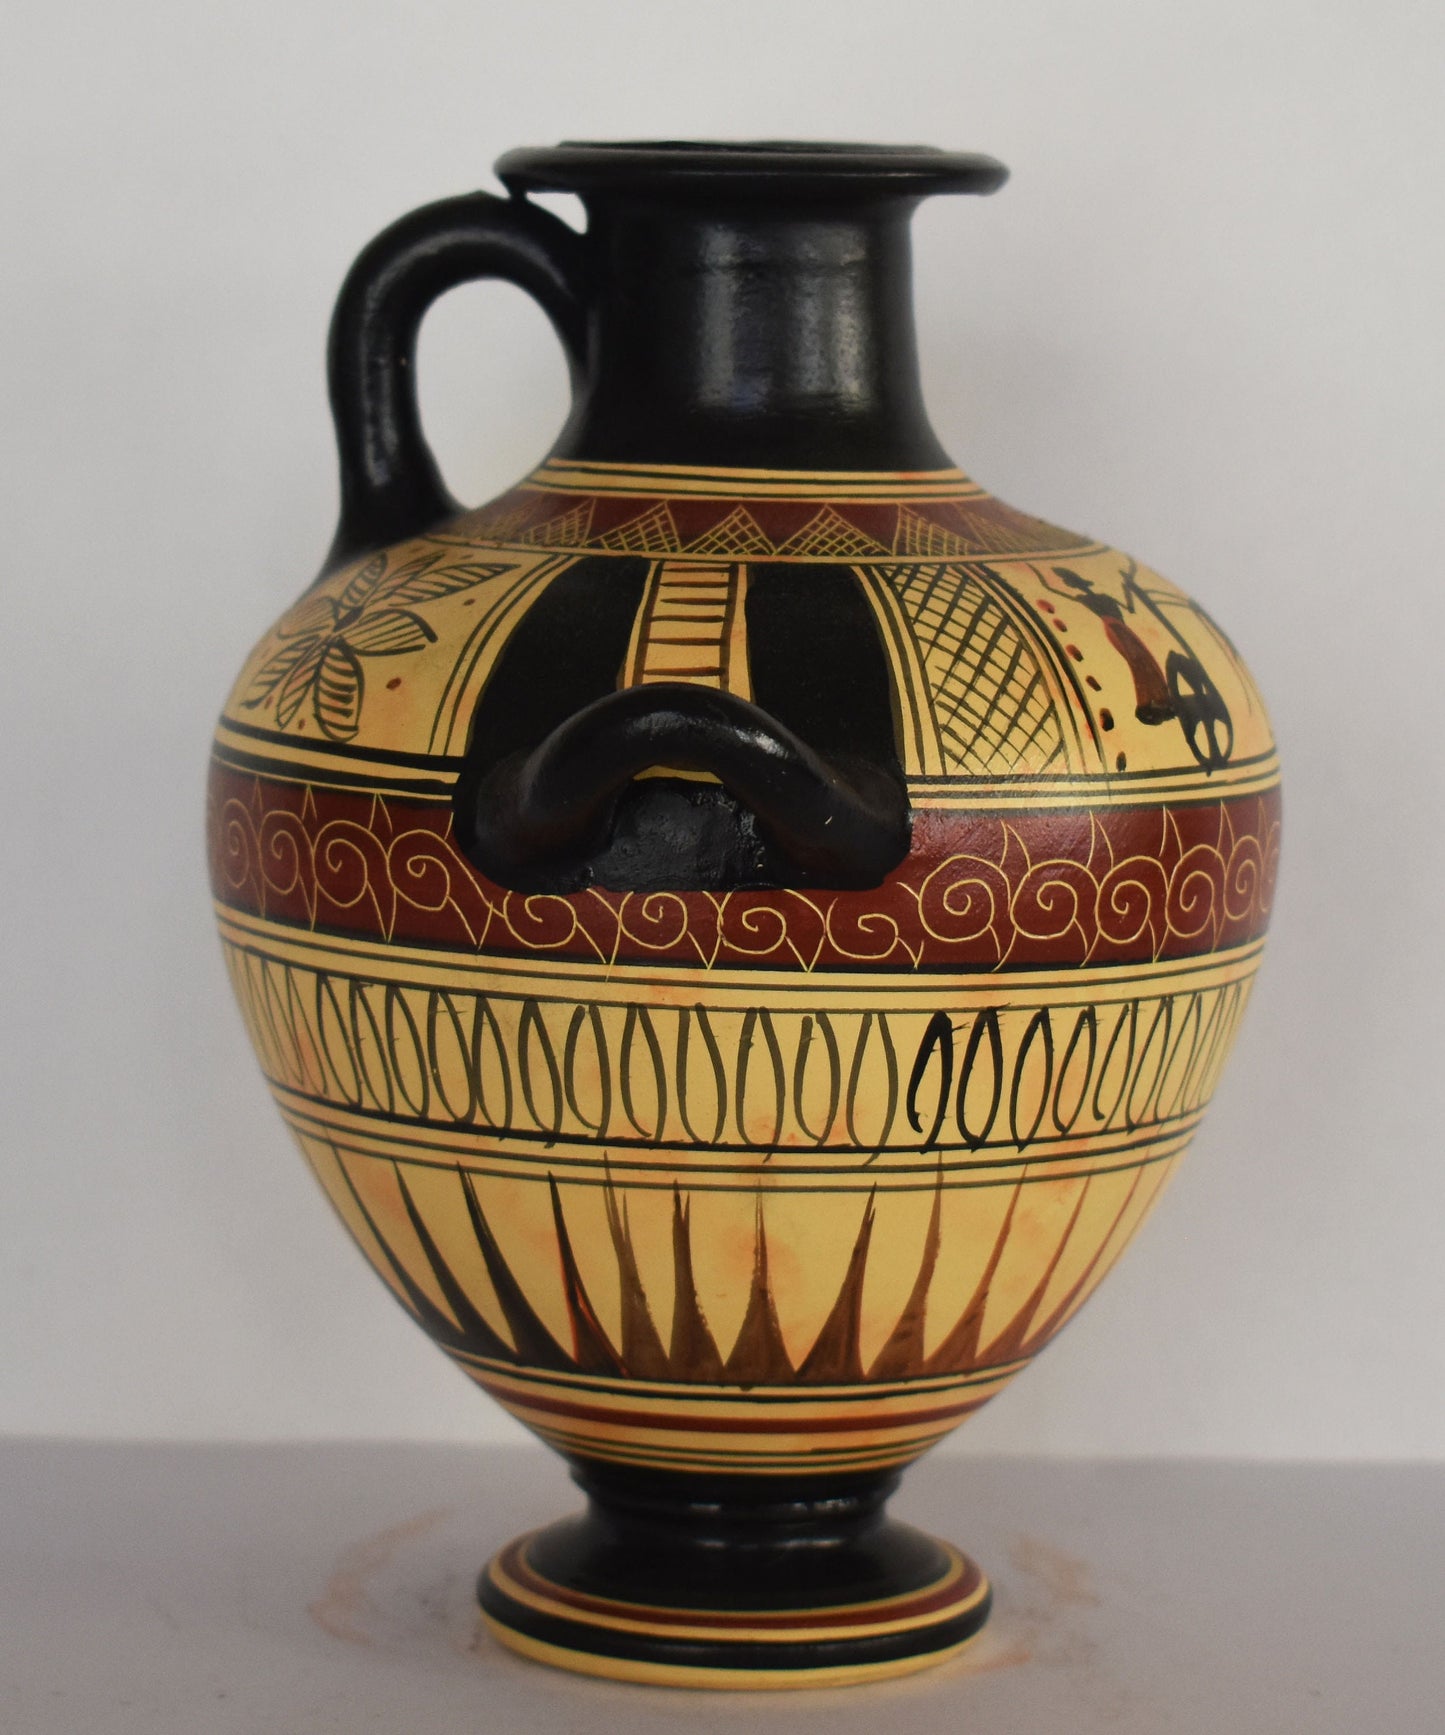 Geometric period Vessel - 900-700 BC - Man on a Chariot and Floral Design - Attica, Athens - Ceramic Vase